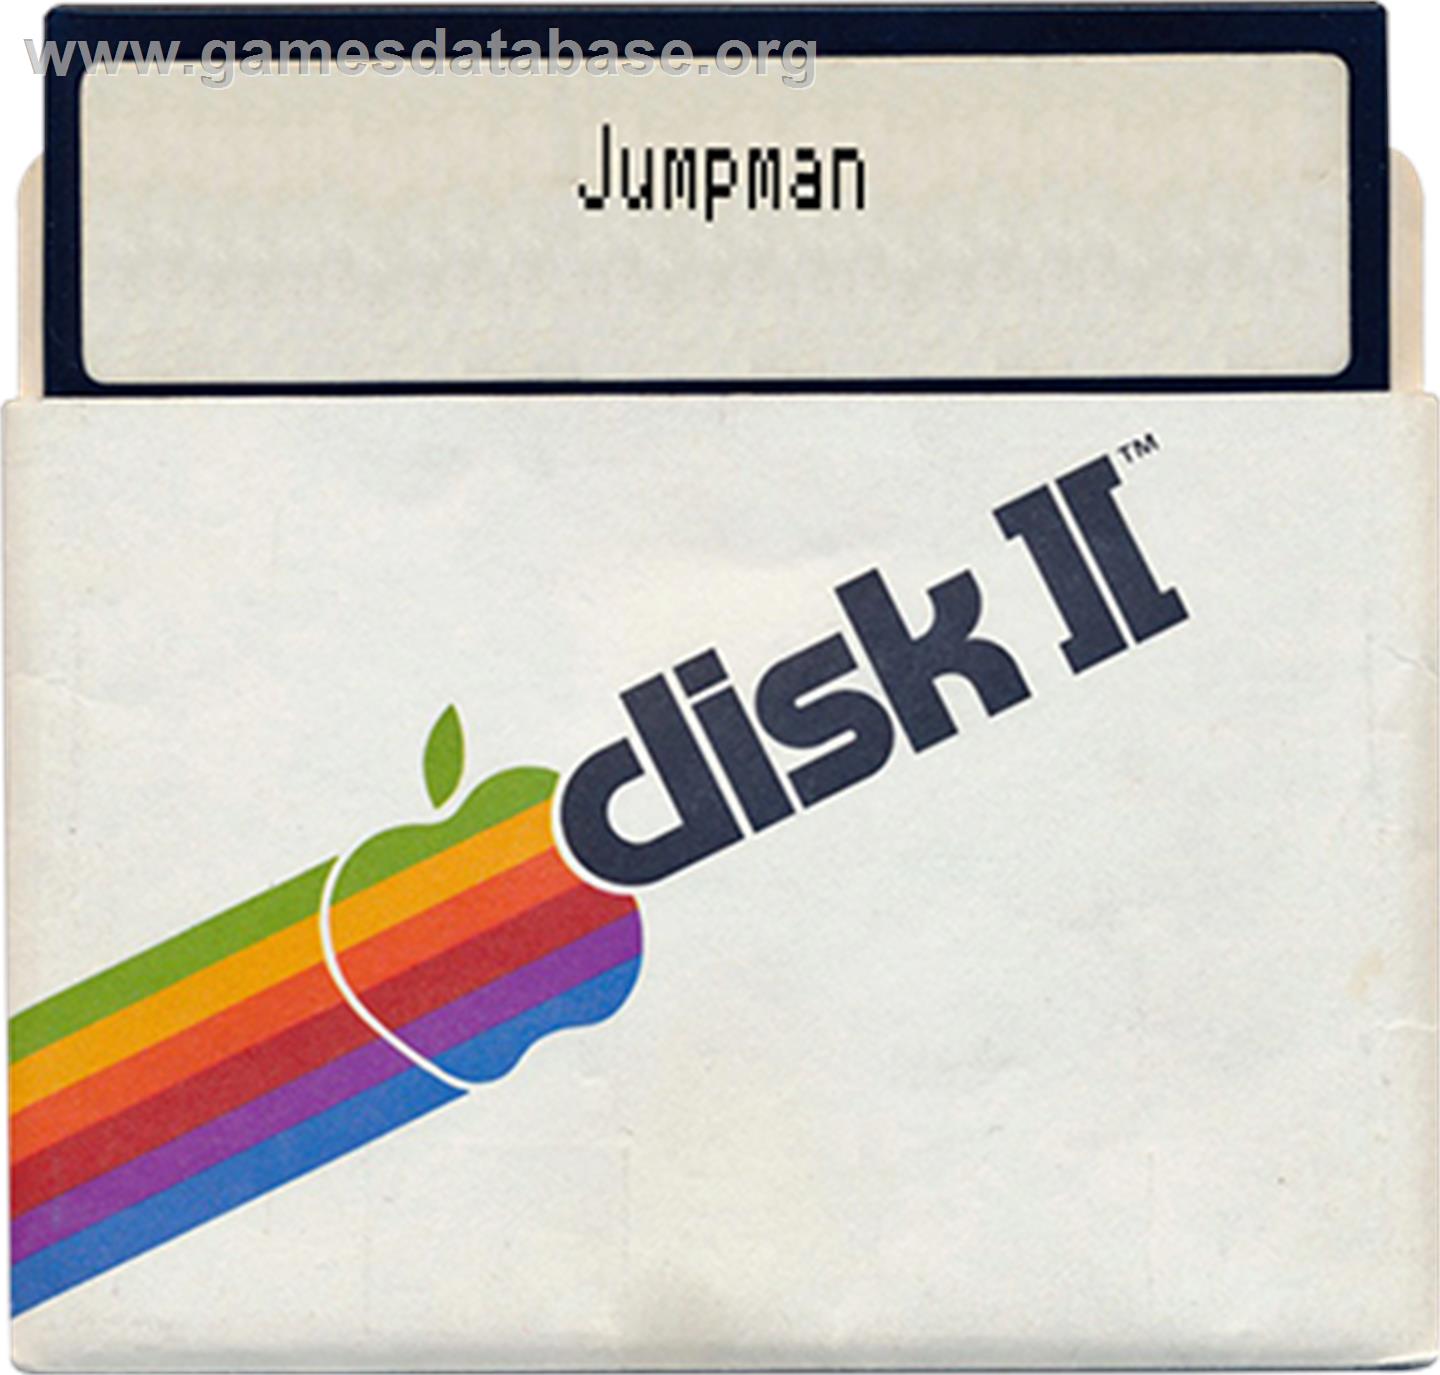 Jumpster - Apple II - Artwork - Disc